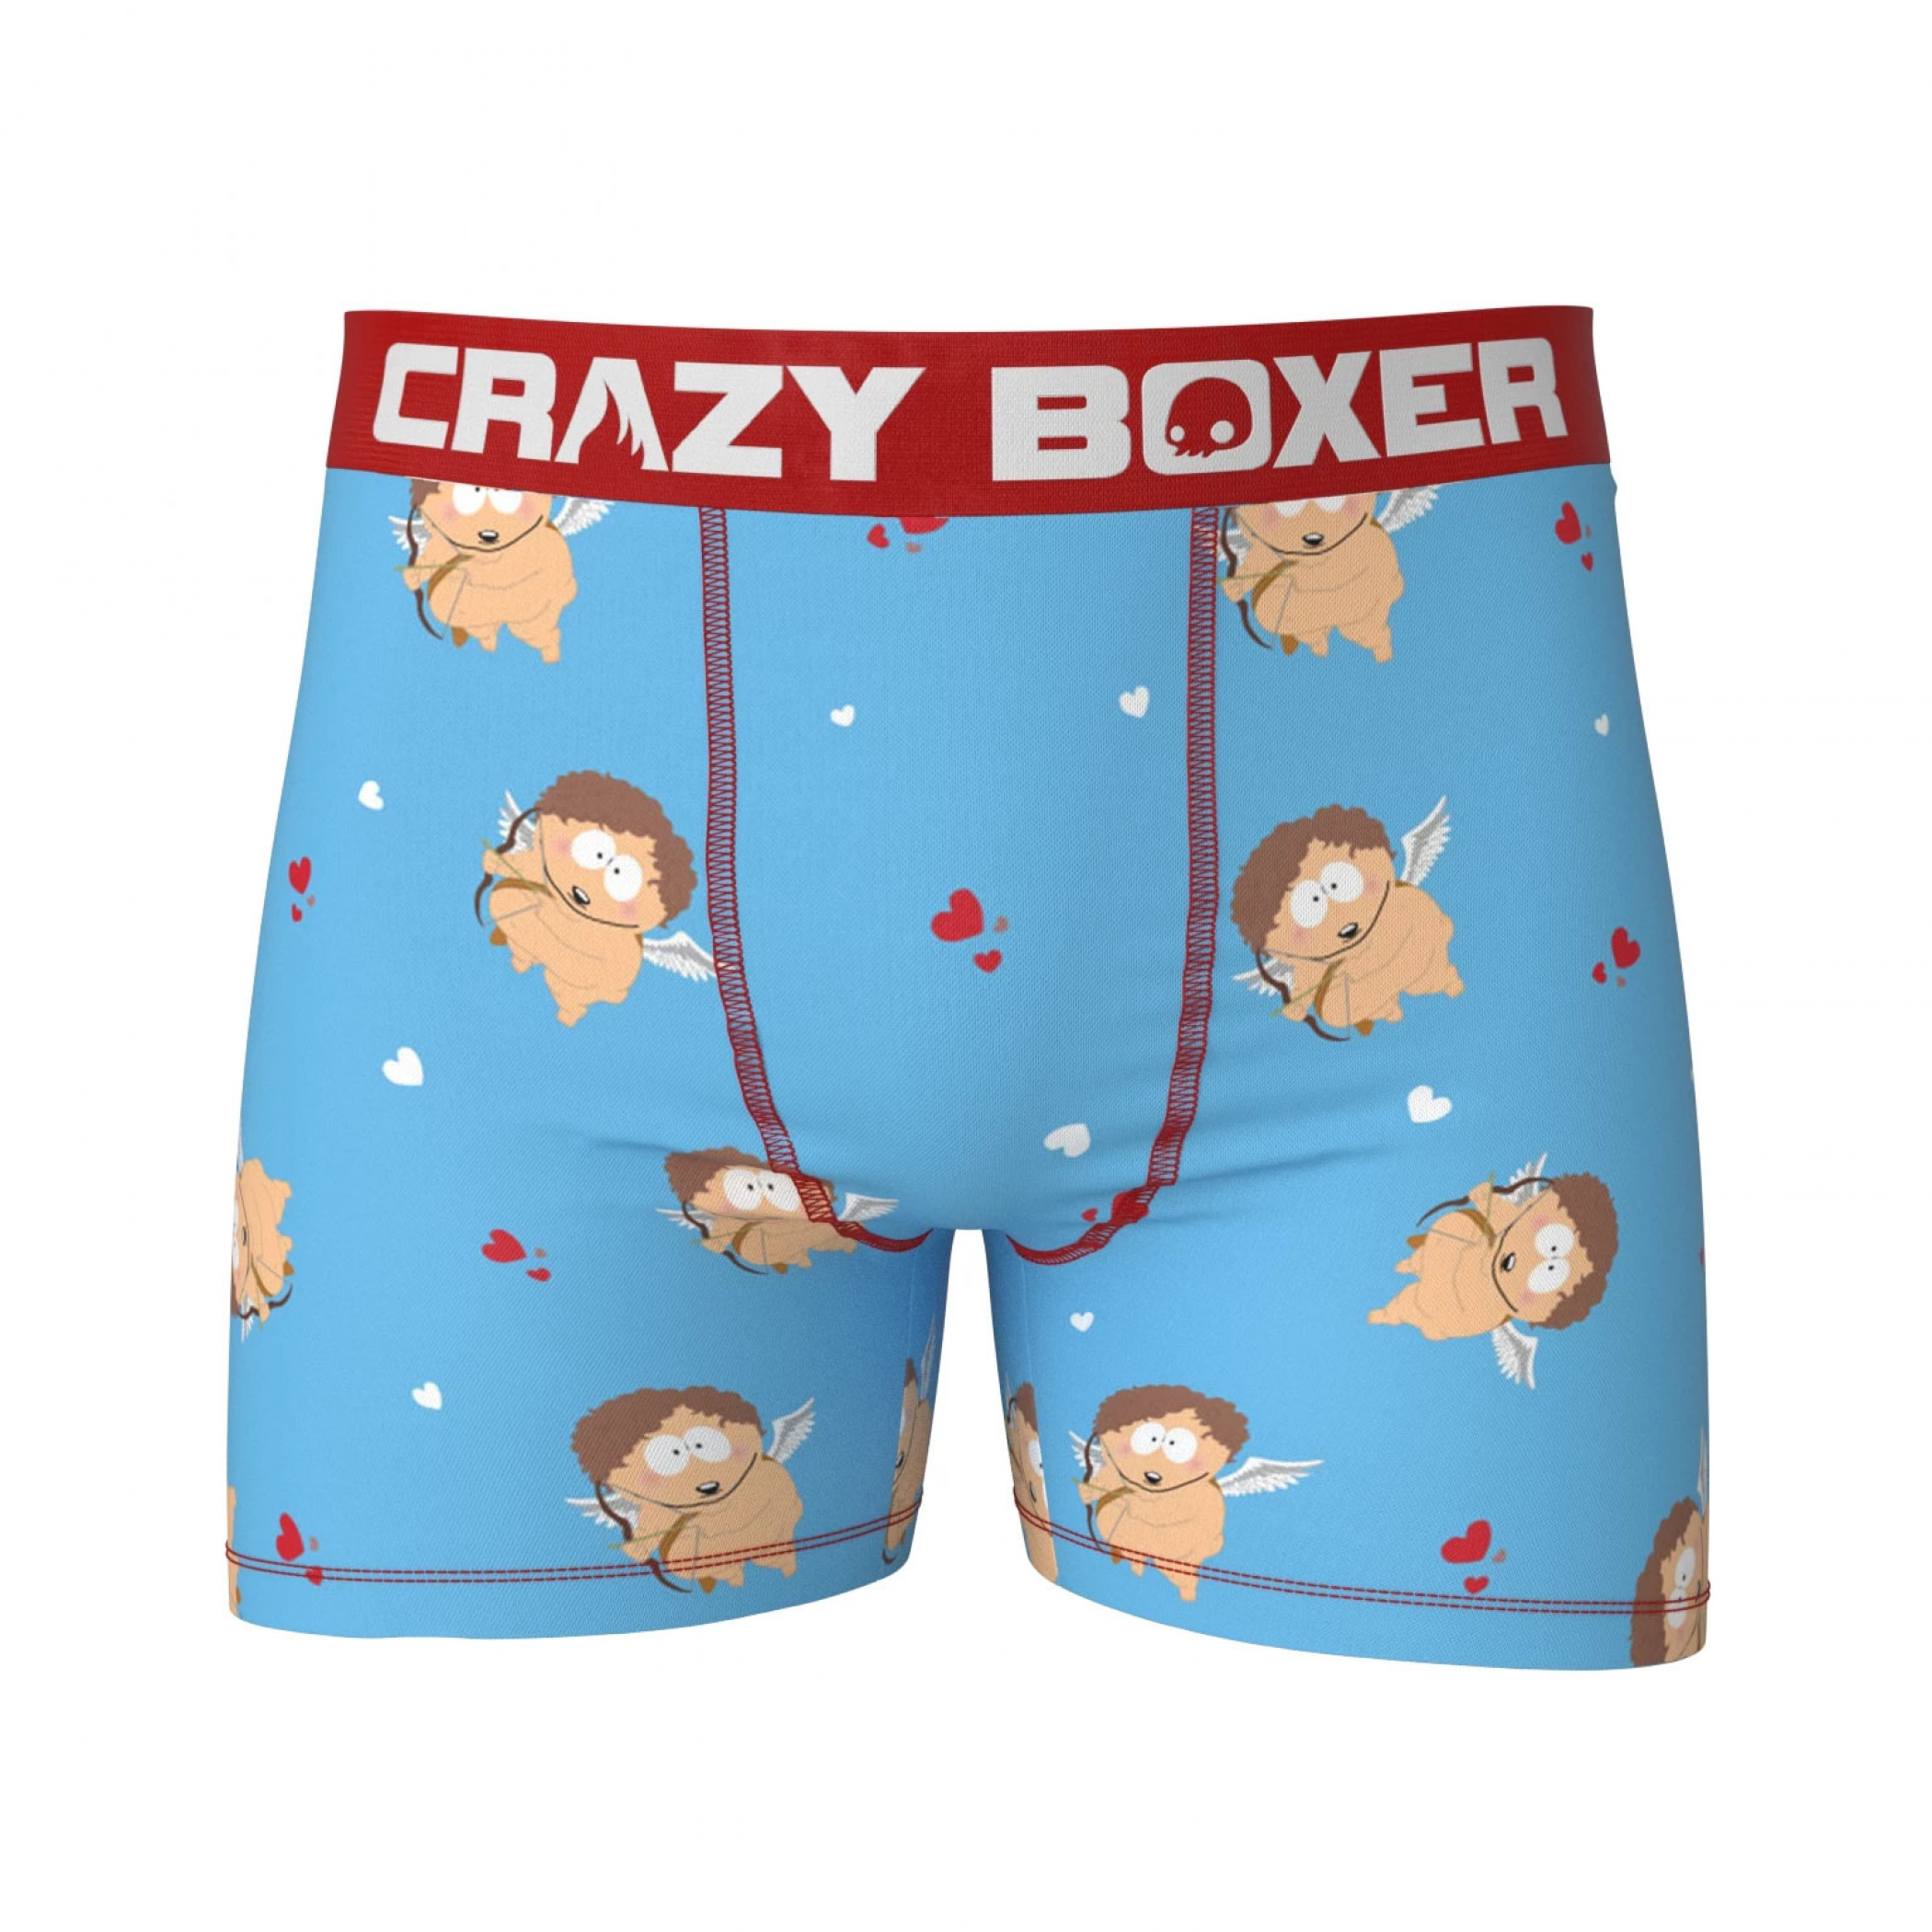 Hankey Holiday Themed Underwear Boxer Briefs XLarge 40-42 South Park Mr